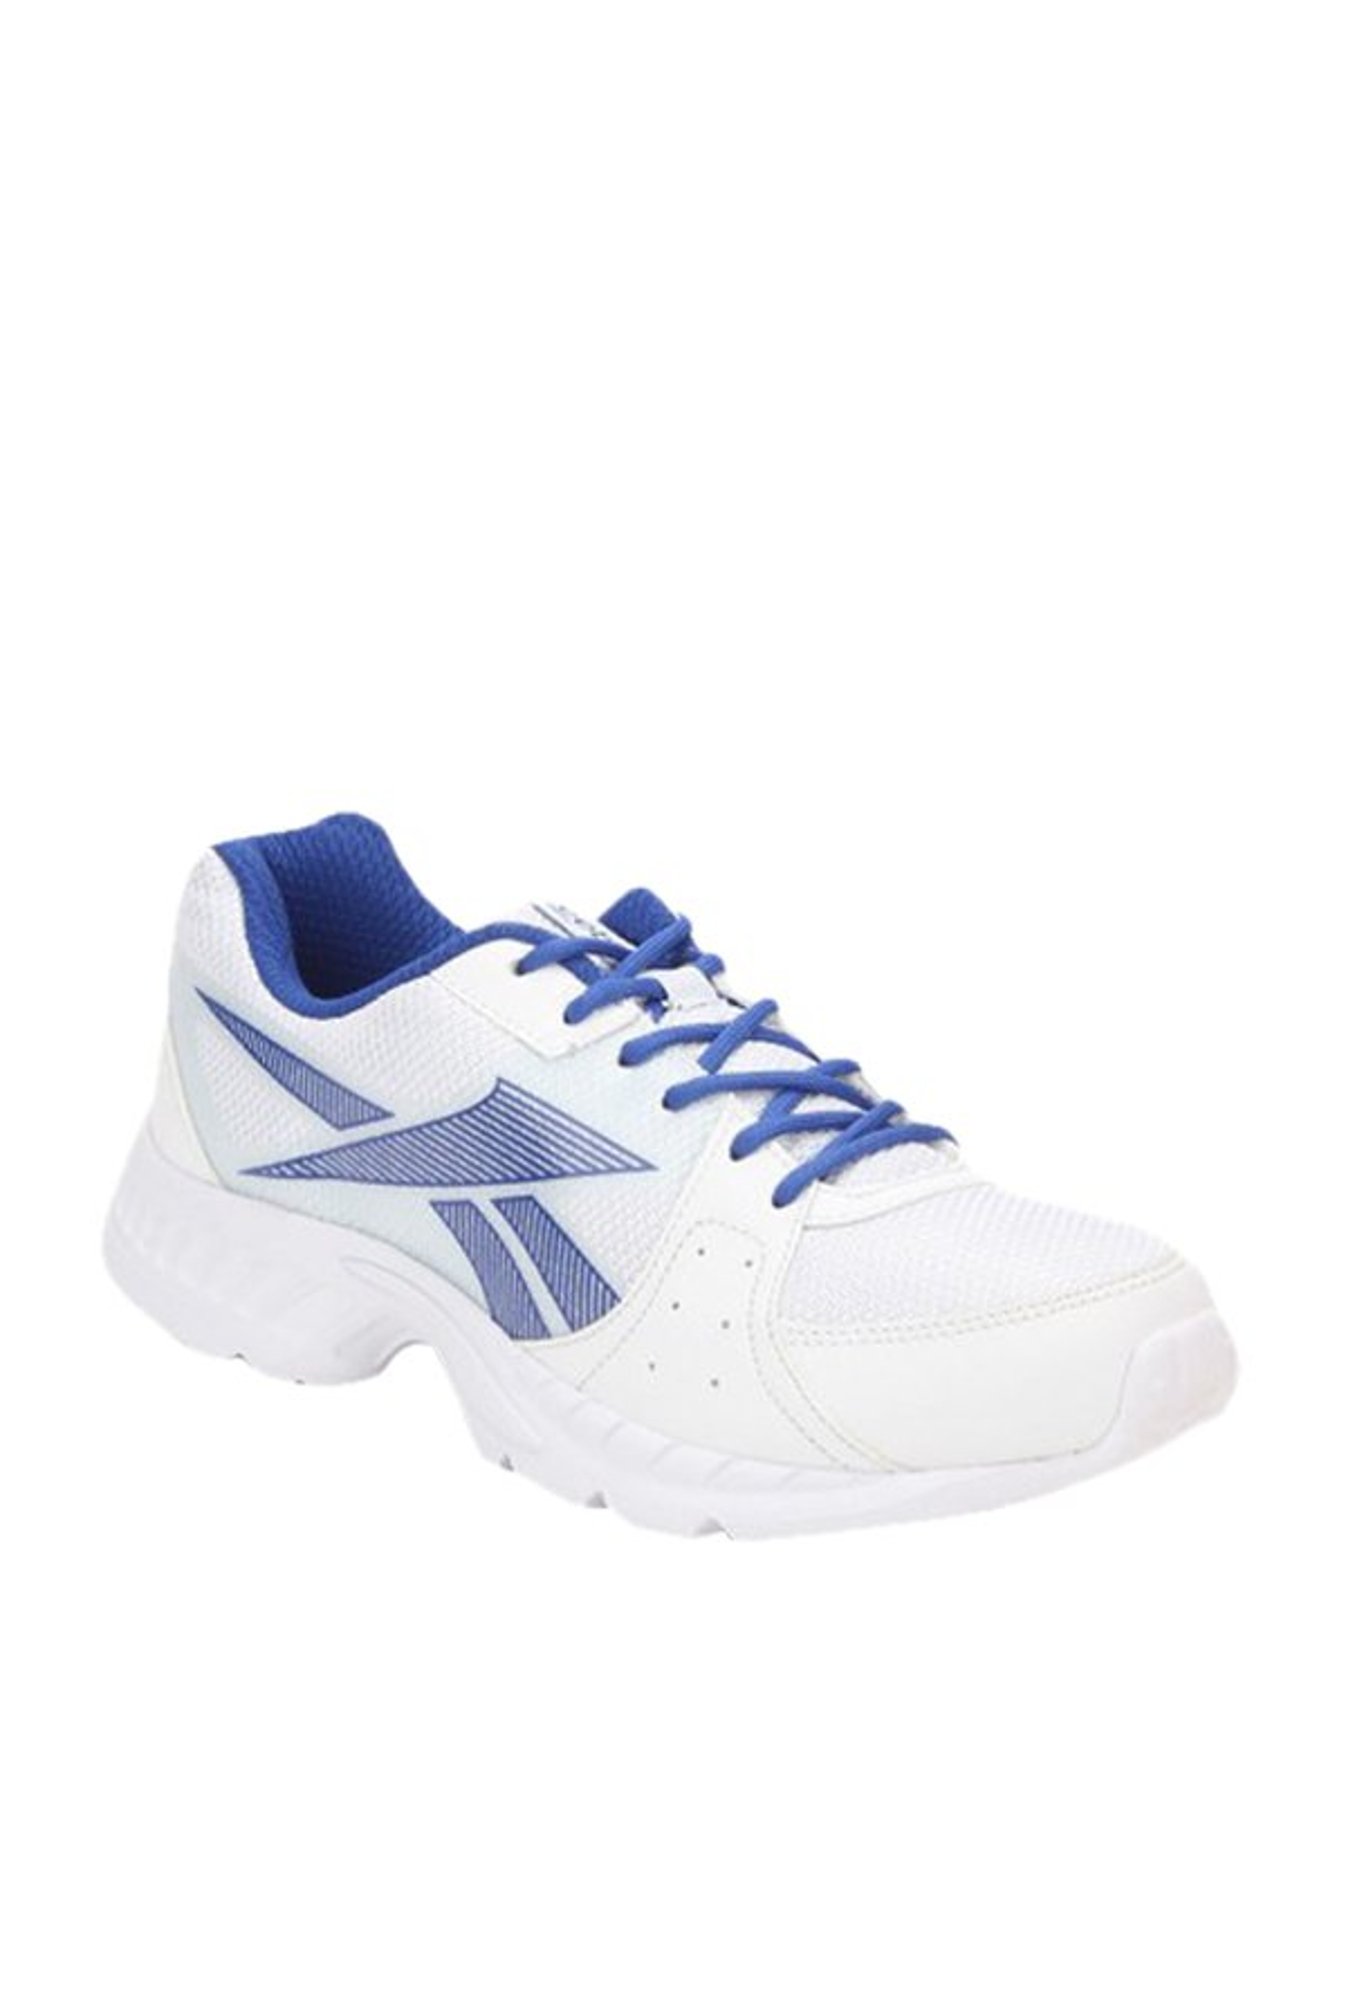 Speed Up Xt White \u0026 Blue Running Shoes 